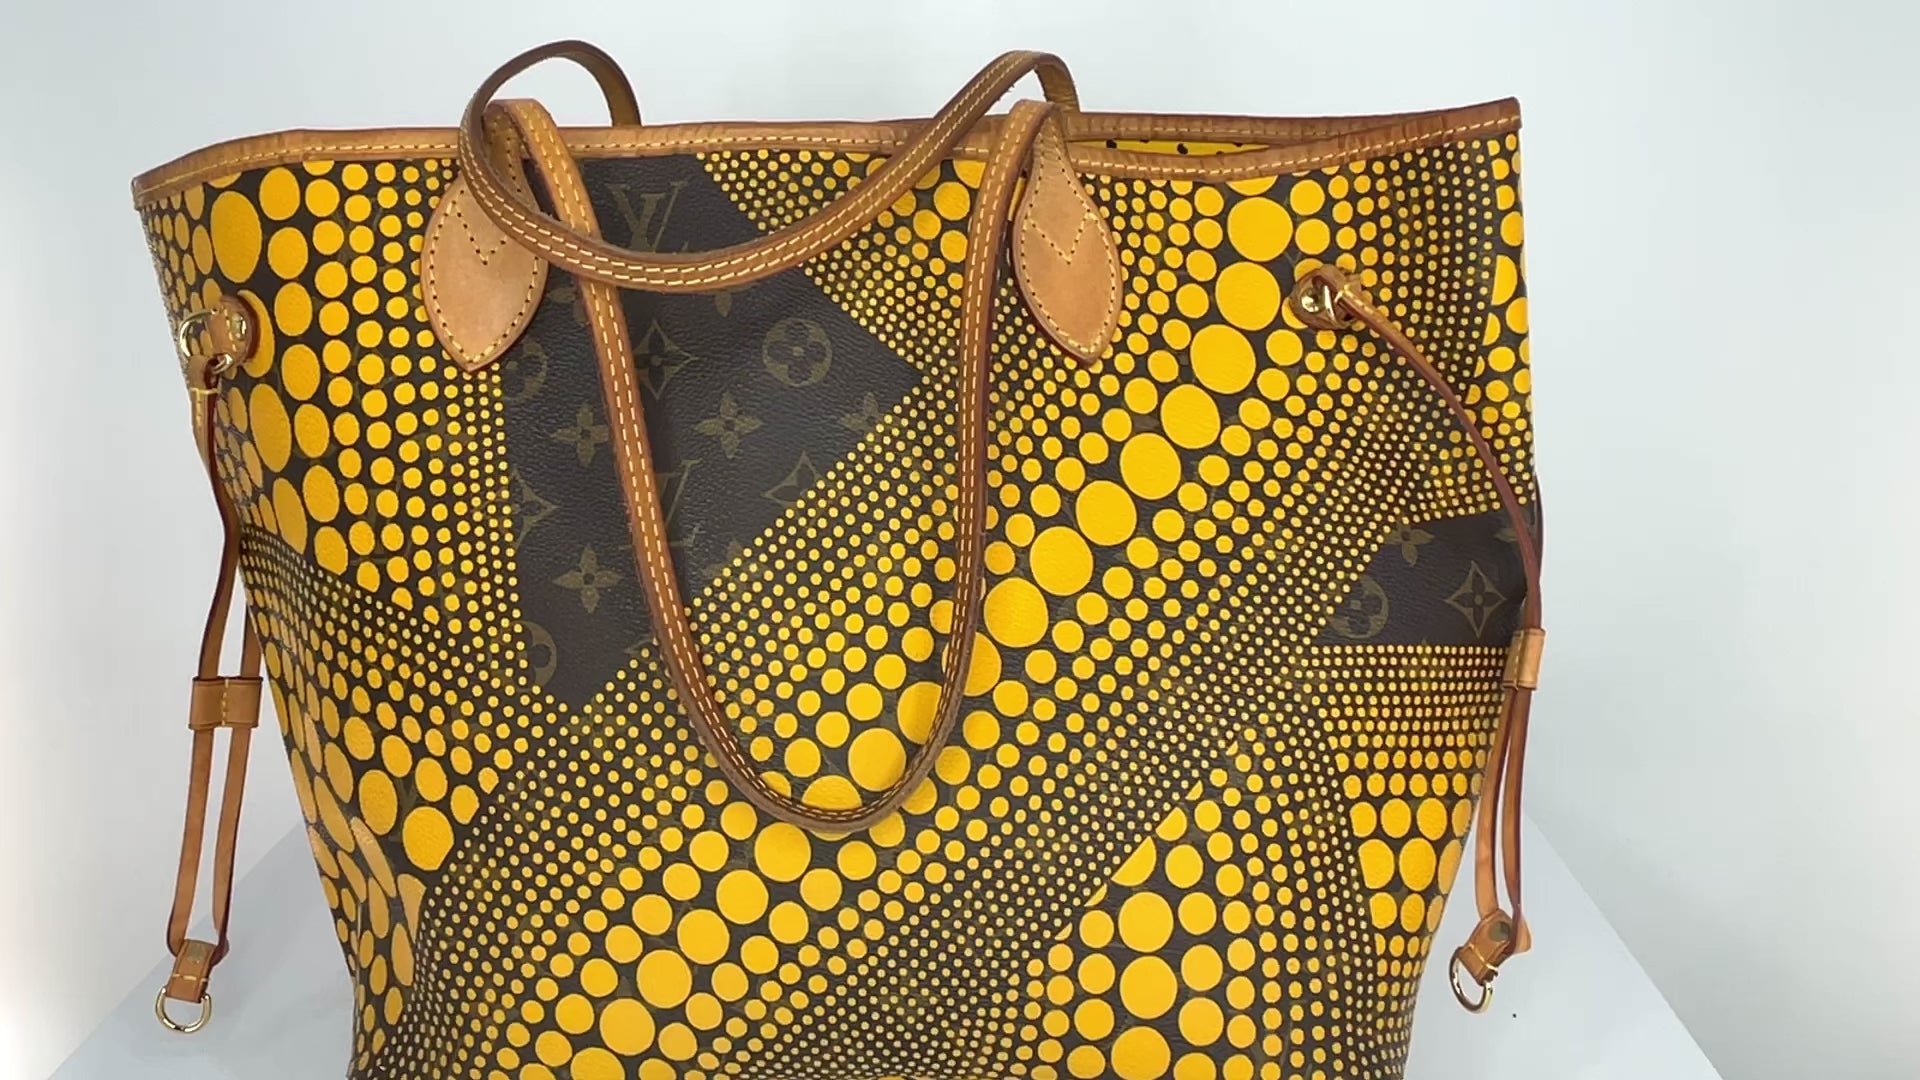 Louis Vuitton Yayoi Kusama Neverfull limited edition yellow tote bag handbag